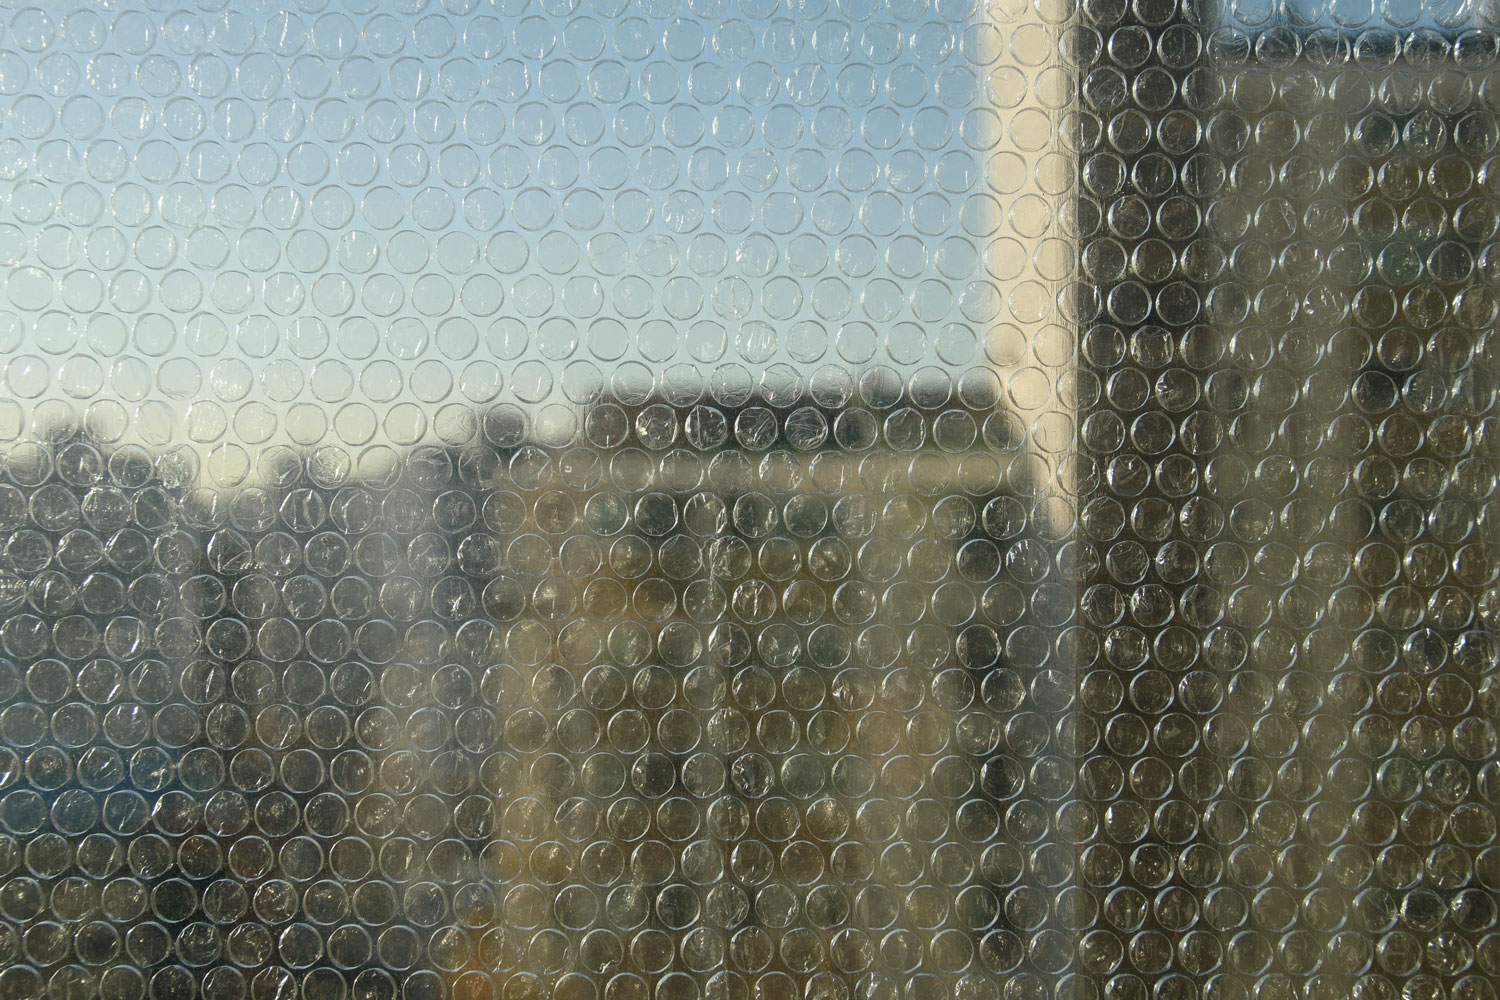 Bubble wrap on the condominium window